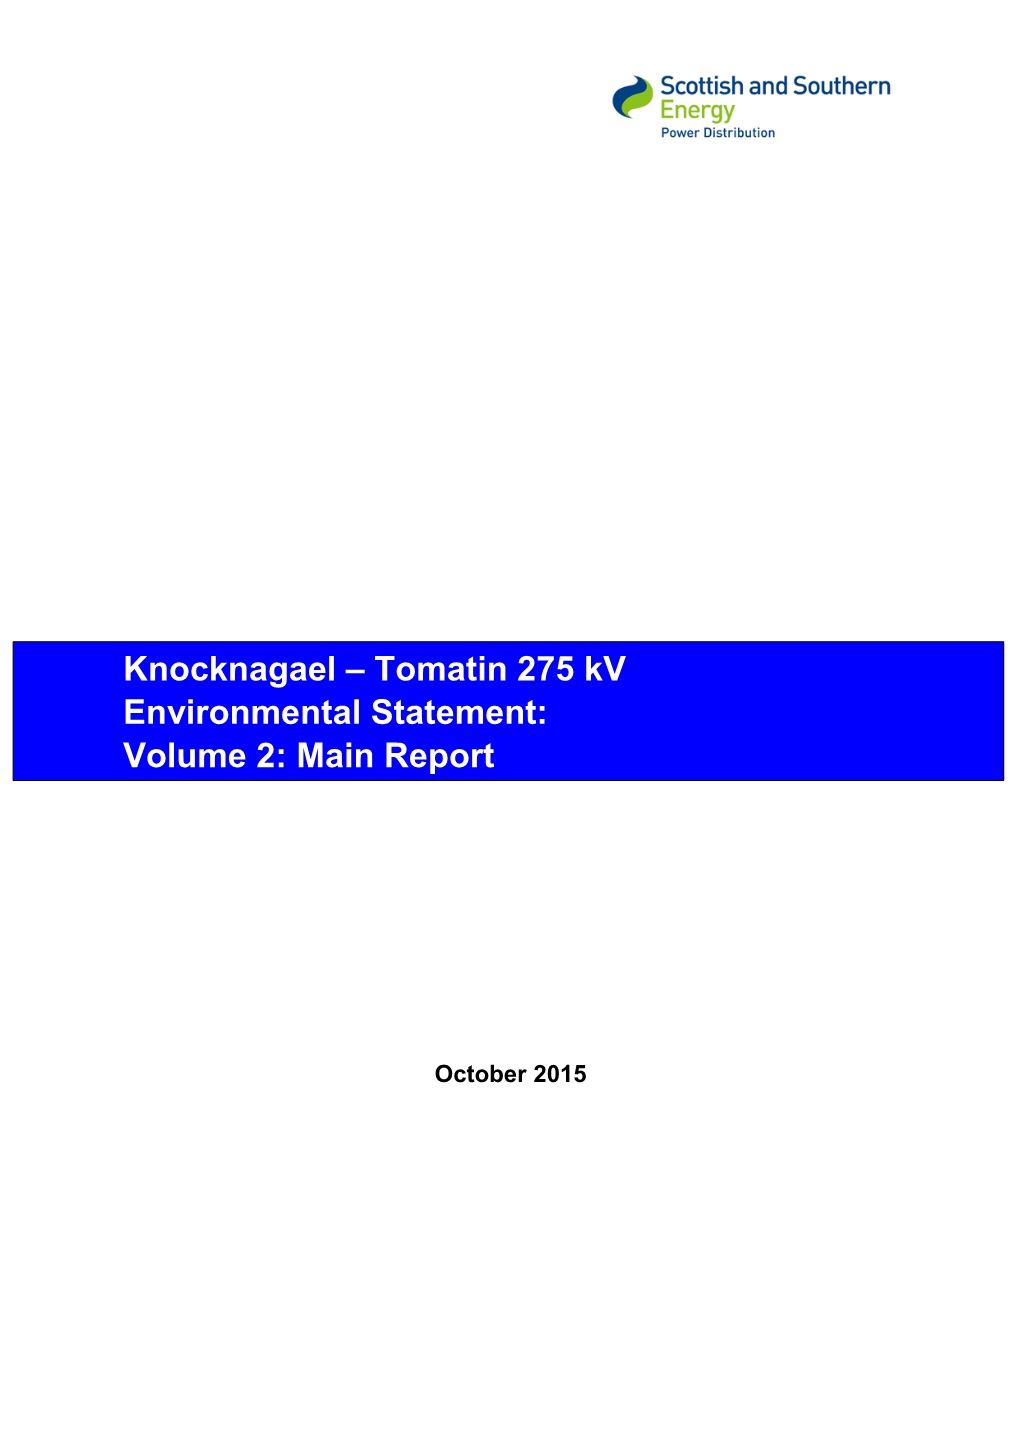 Knocknagael – Tomatin 275 Kv Environmental Statement: Volume 2: Main Report